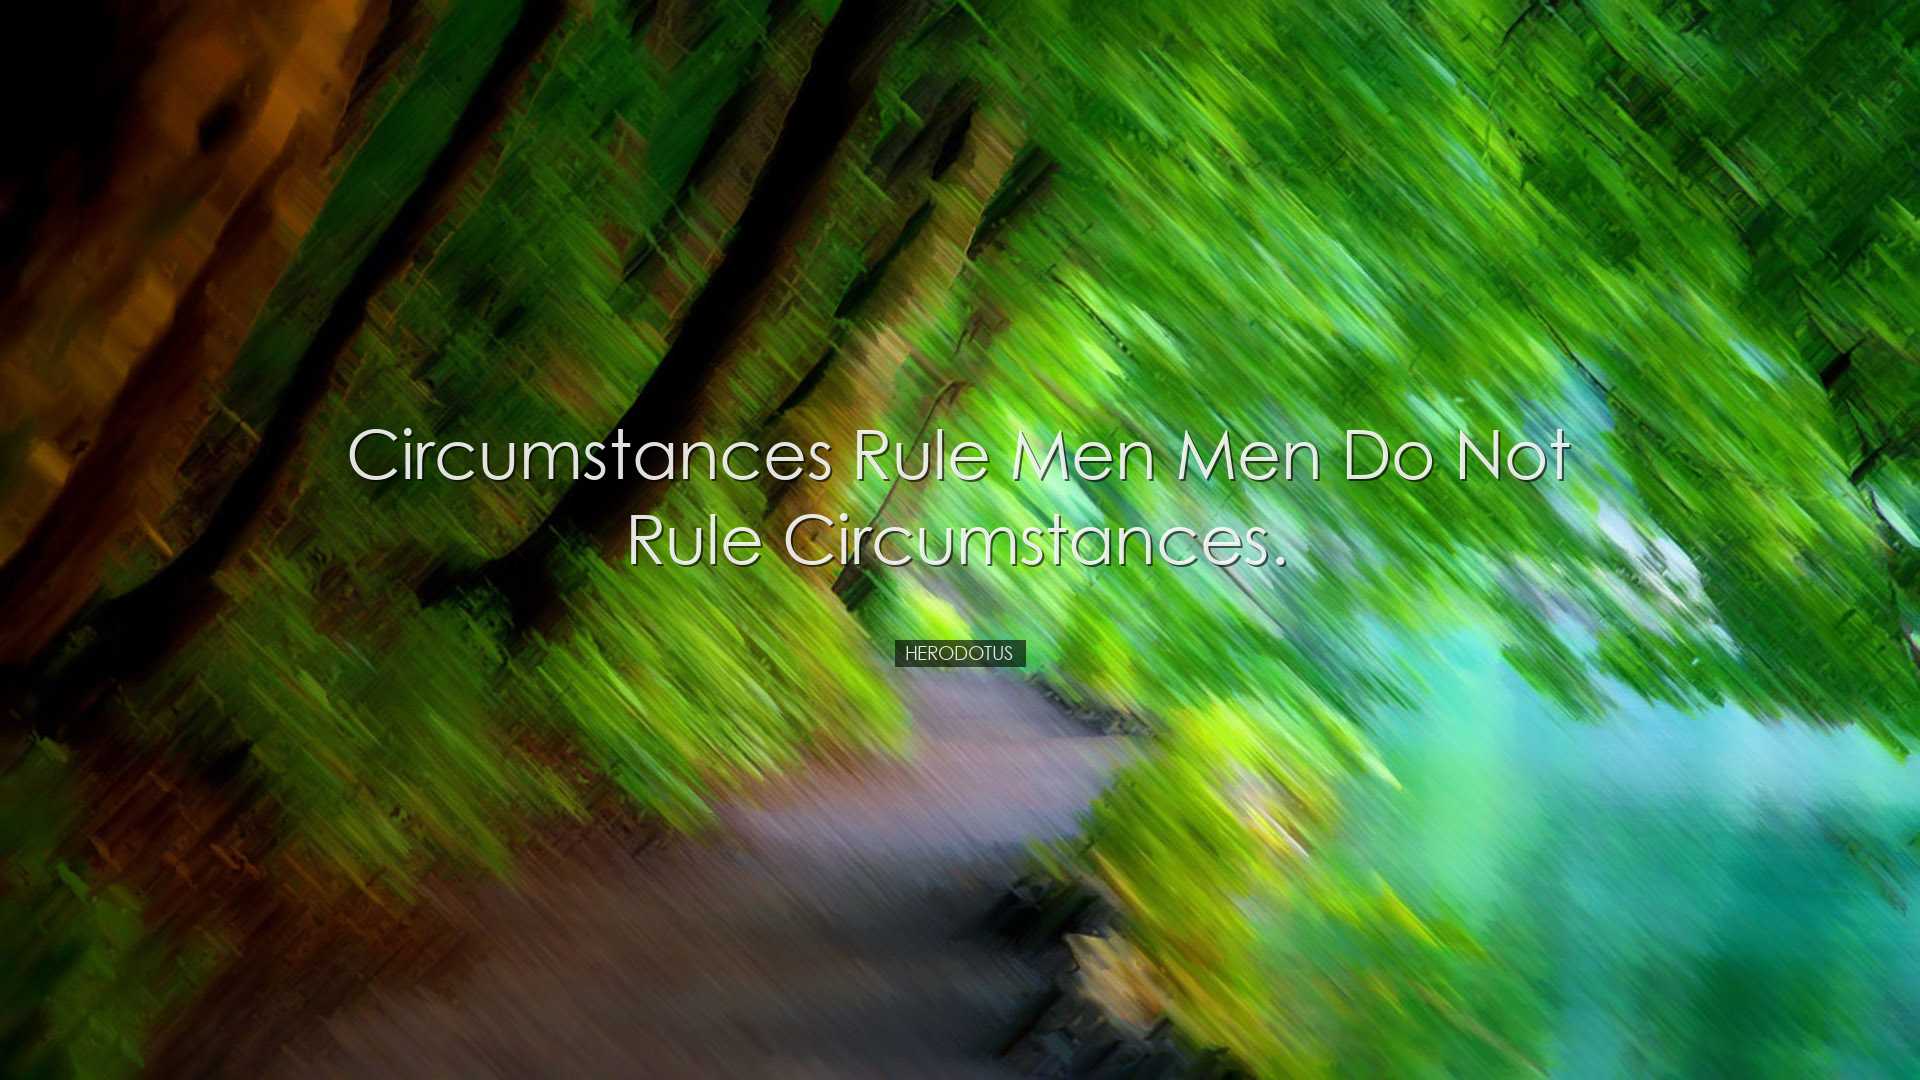 Circumstances rule men men do not rule circumstances. - Herodotus